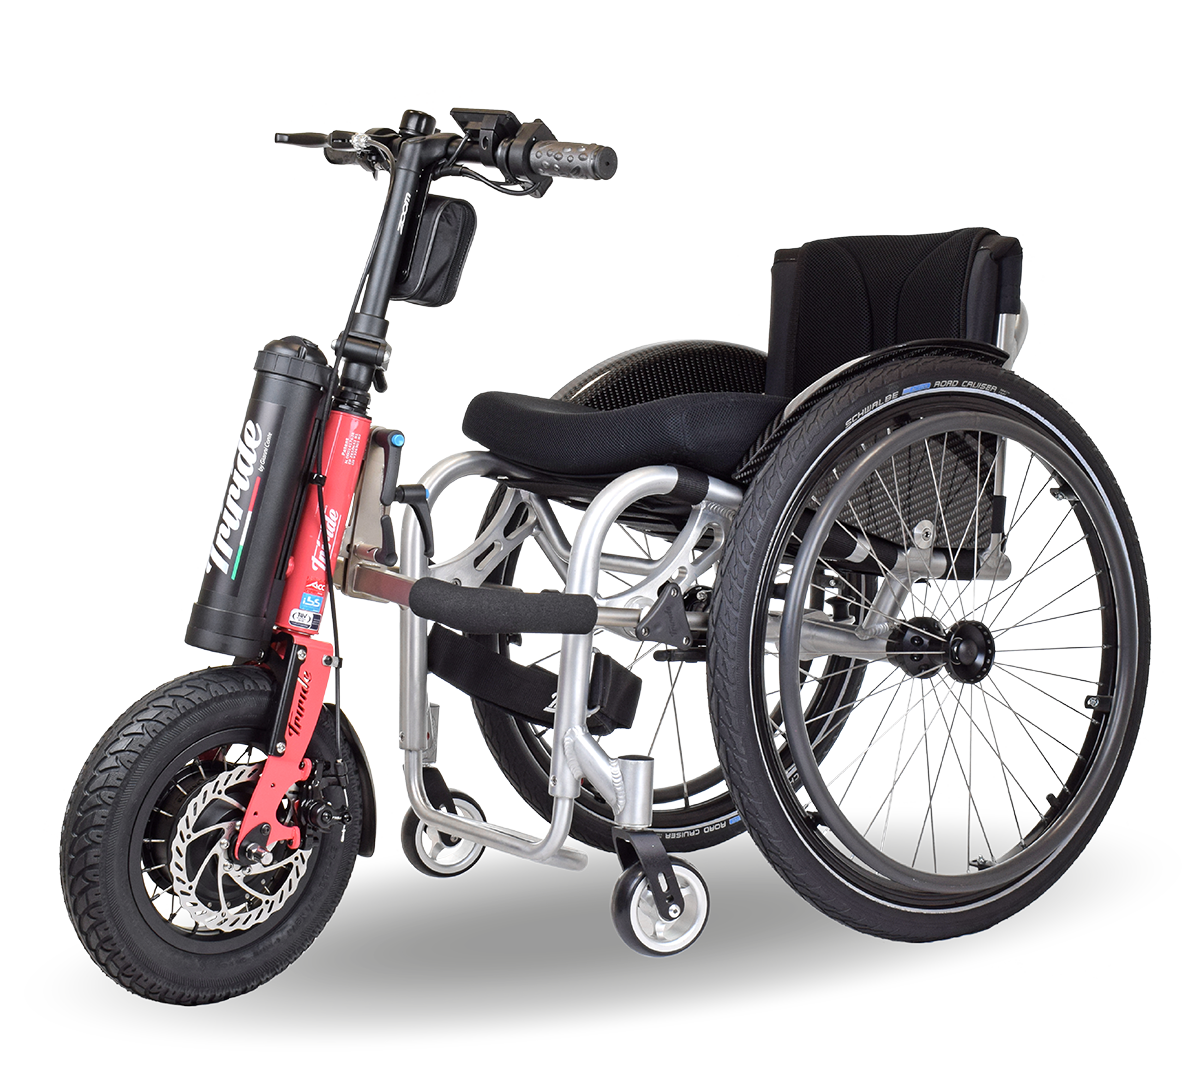 Red wheelchair Attachment on a modern silver wheelchair